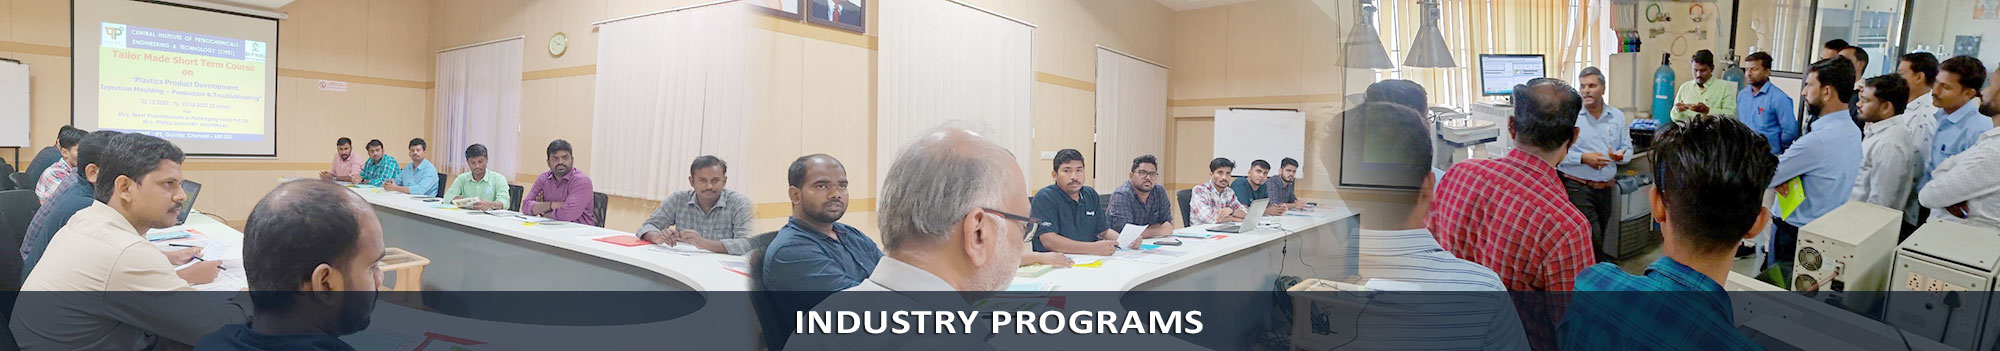 Industry Programs